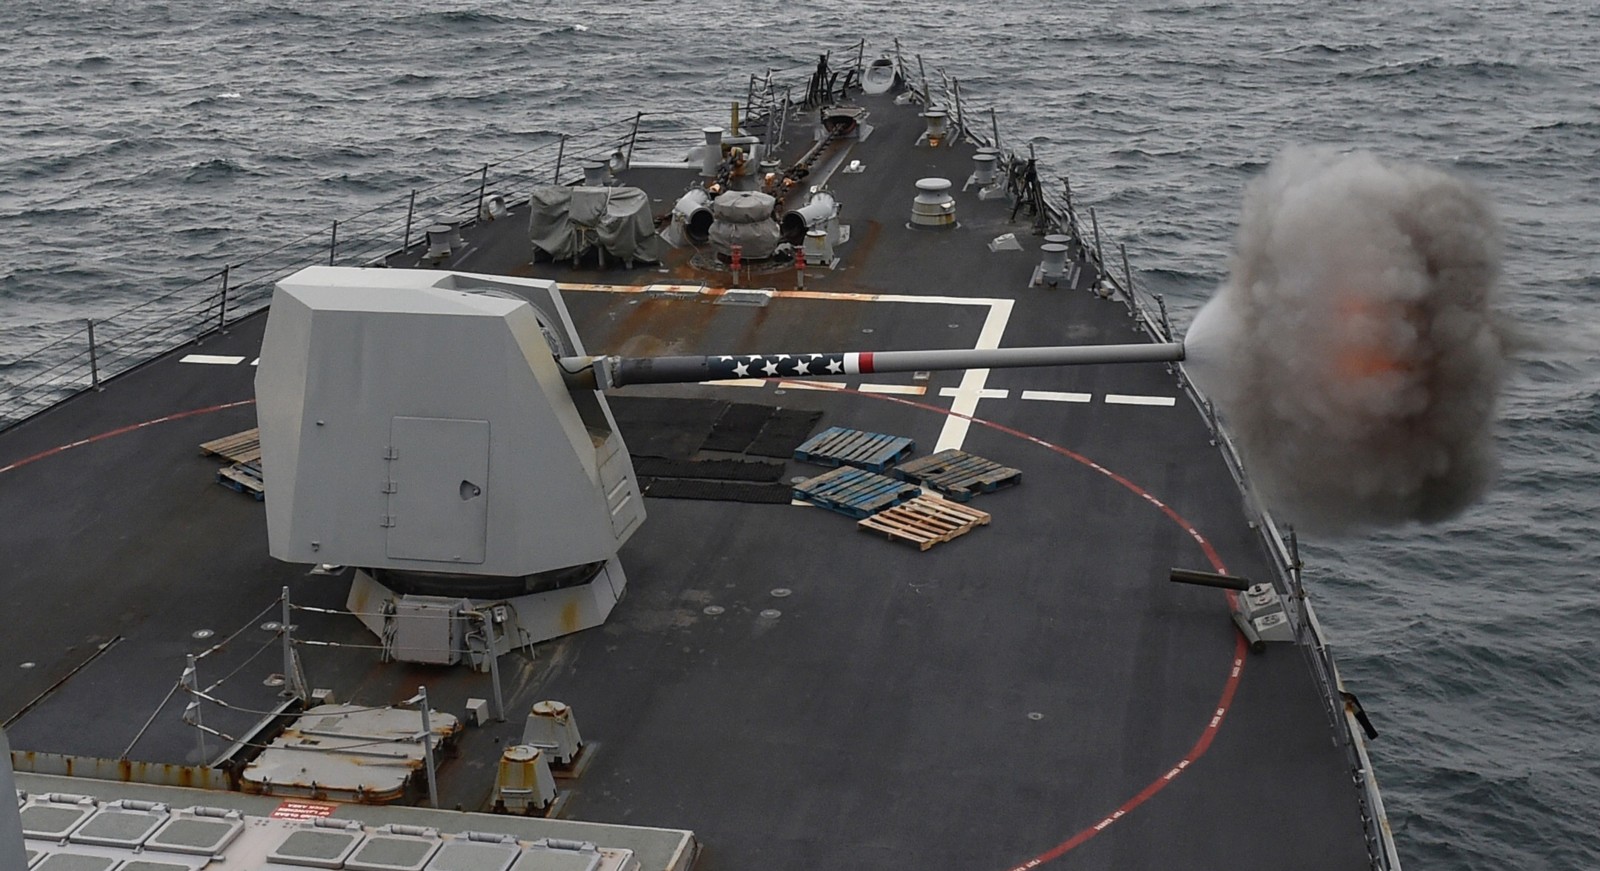 ddg-107 uss gravely arleigh burke class guided missile destroyer aegis us navy exercise joint warrior 2019 37